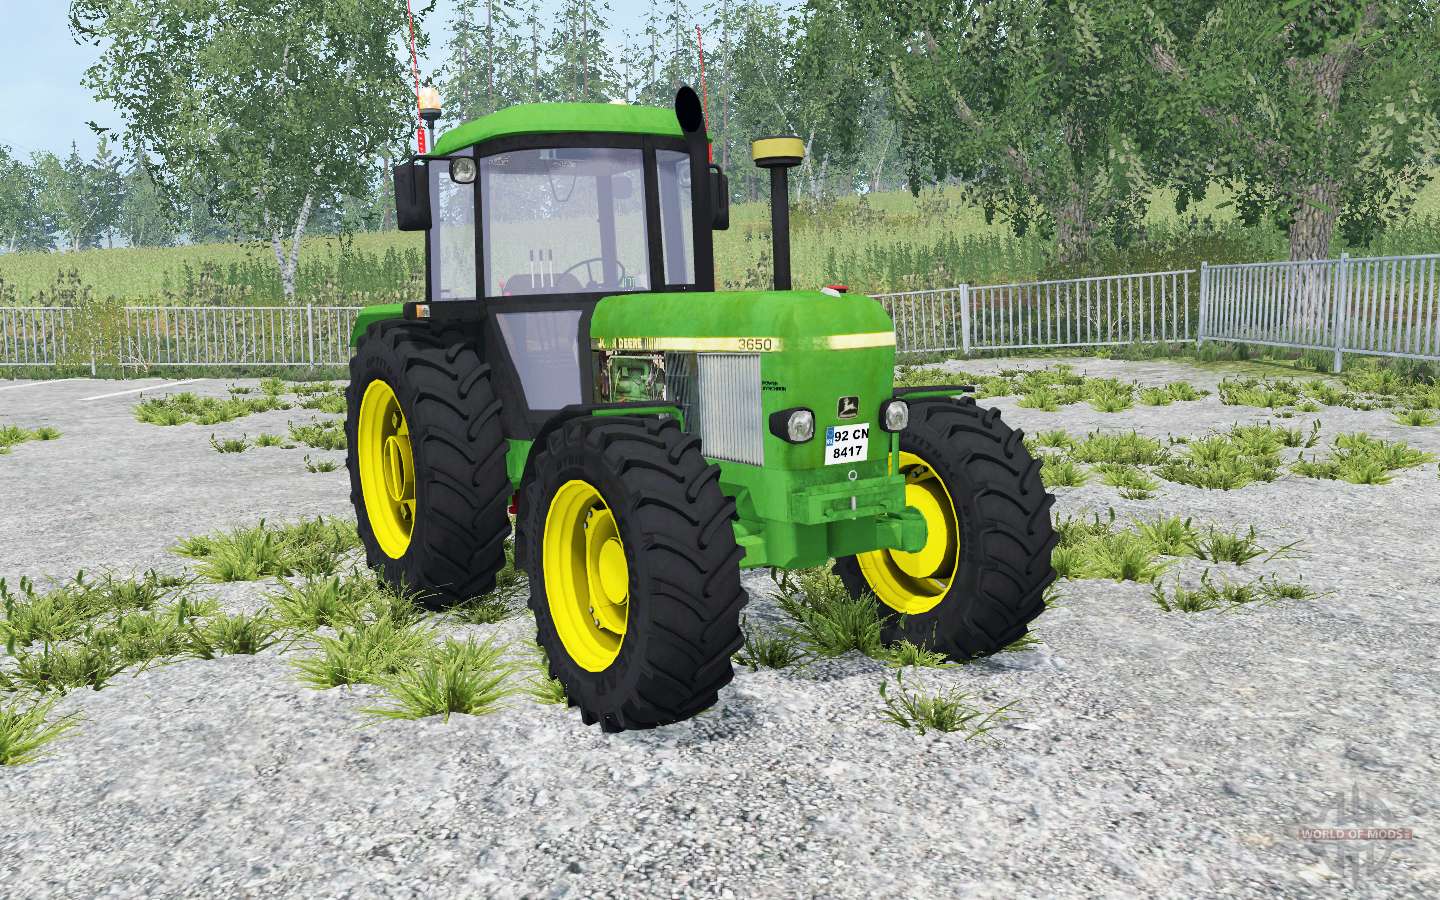 John Deere 3650 dark pastel green para Farming Simulator 2015